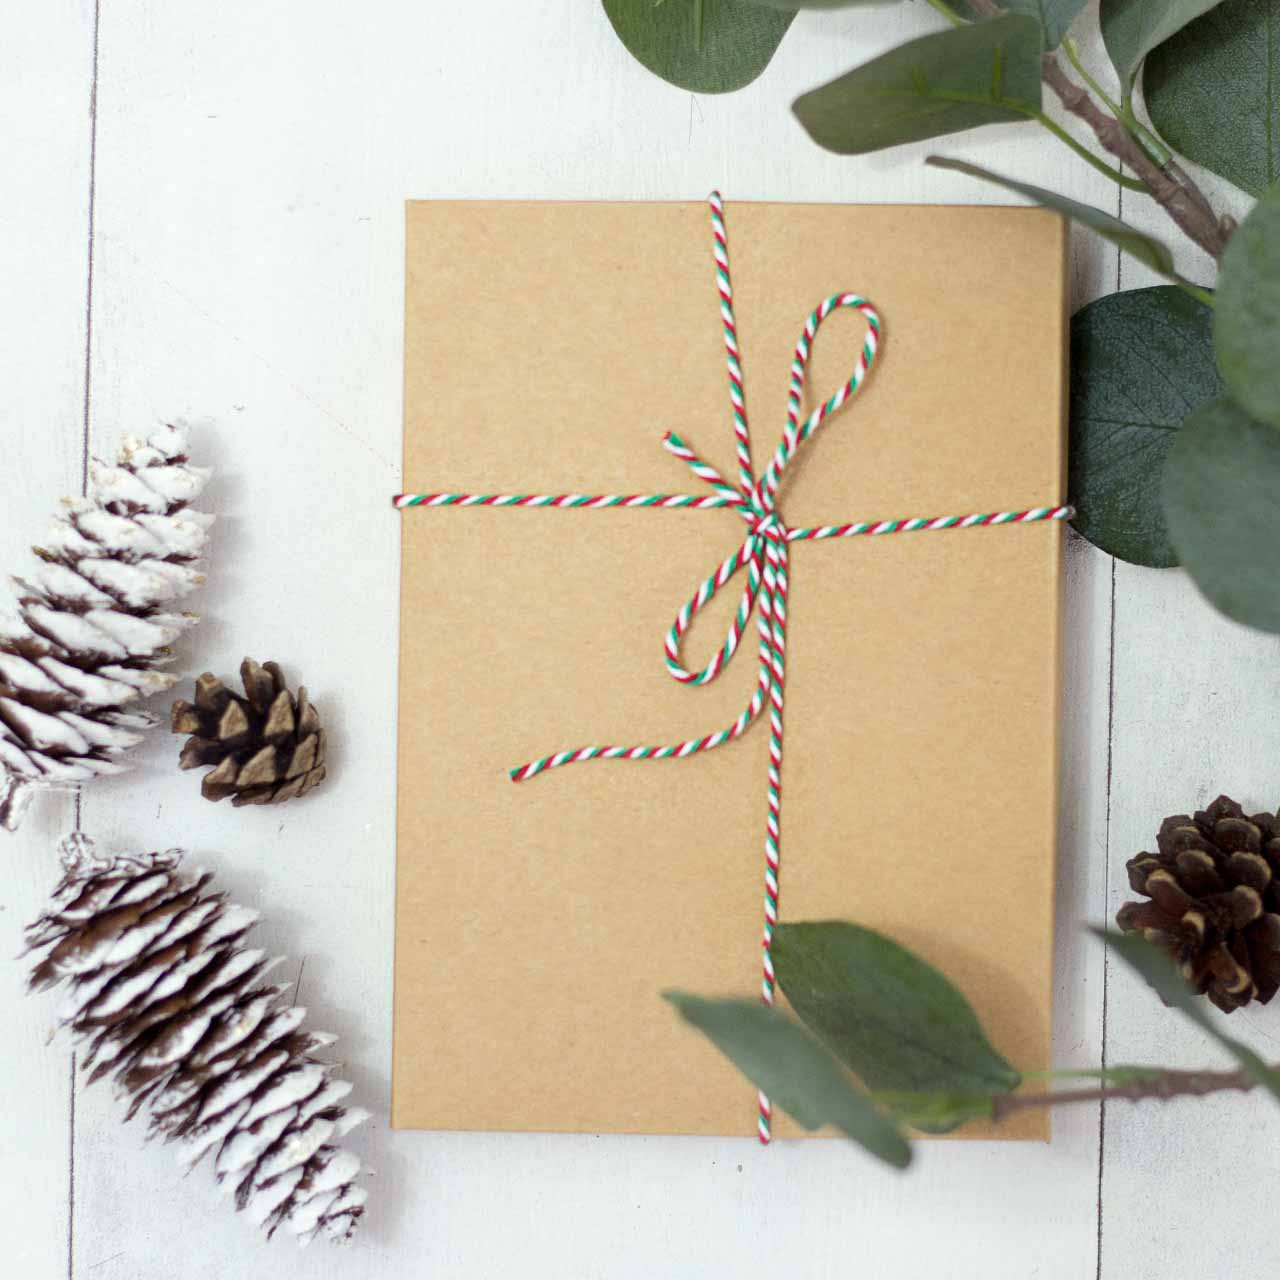 Box of 6 Personalised Tartan Tree Christmas Cards